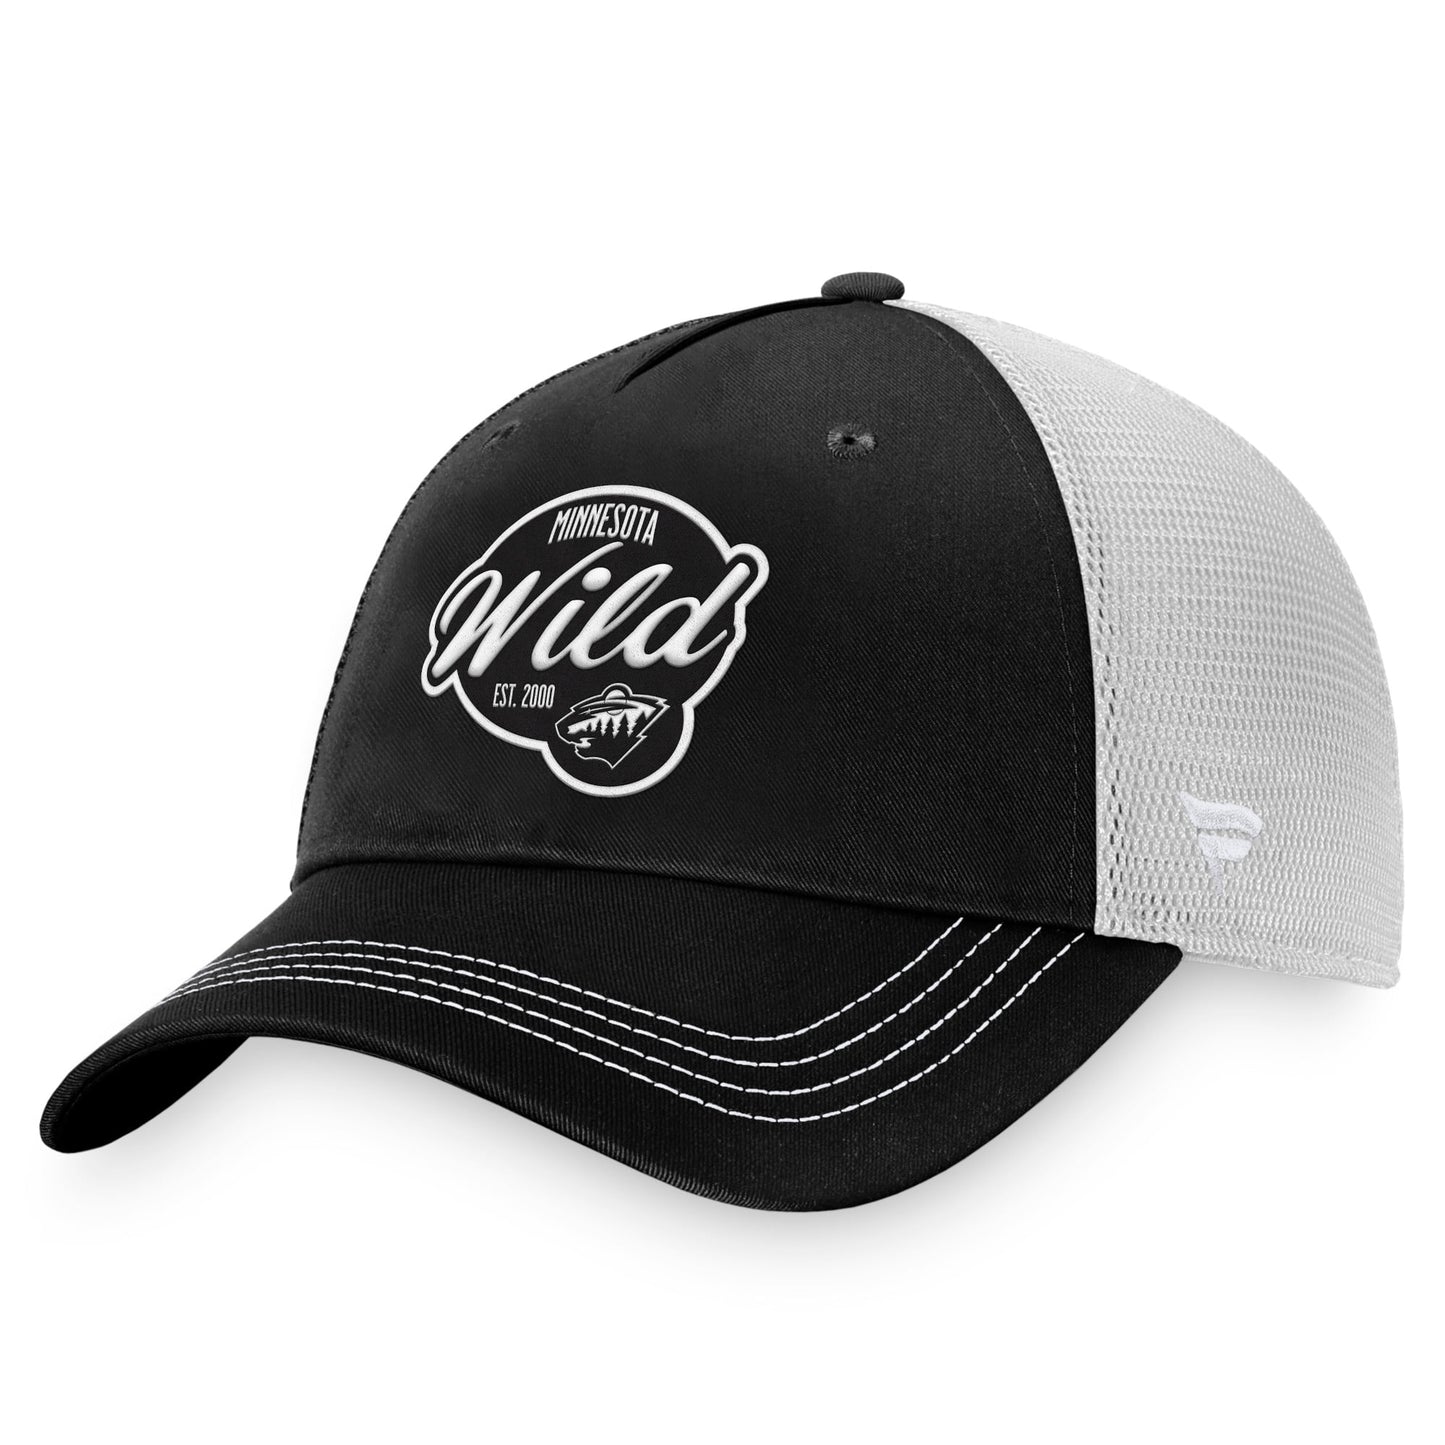 Women's Fanatics Branded Black/White Minnesota Wild Fundamental Trucker Adjustable Hat - OSFA